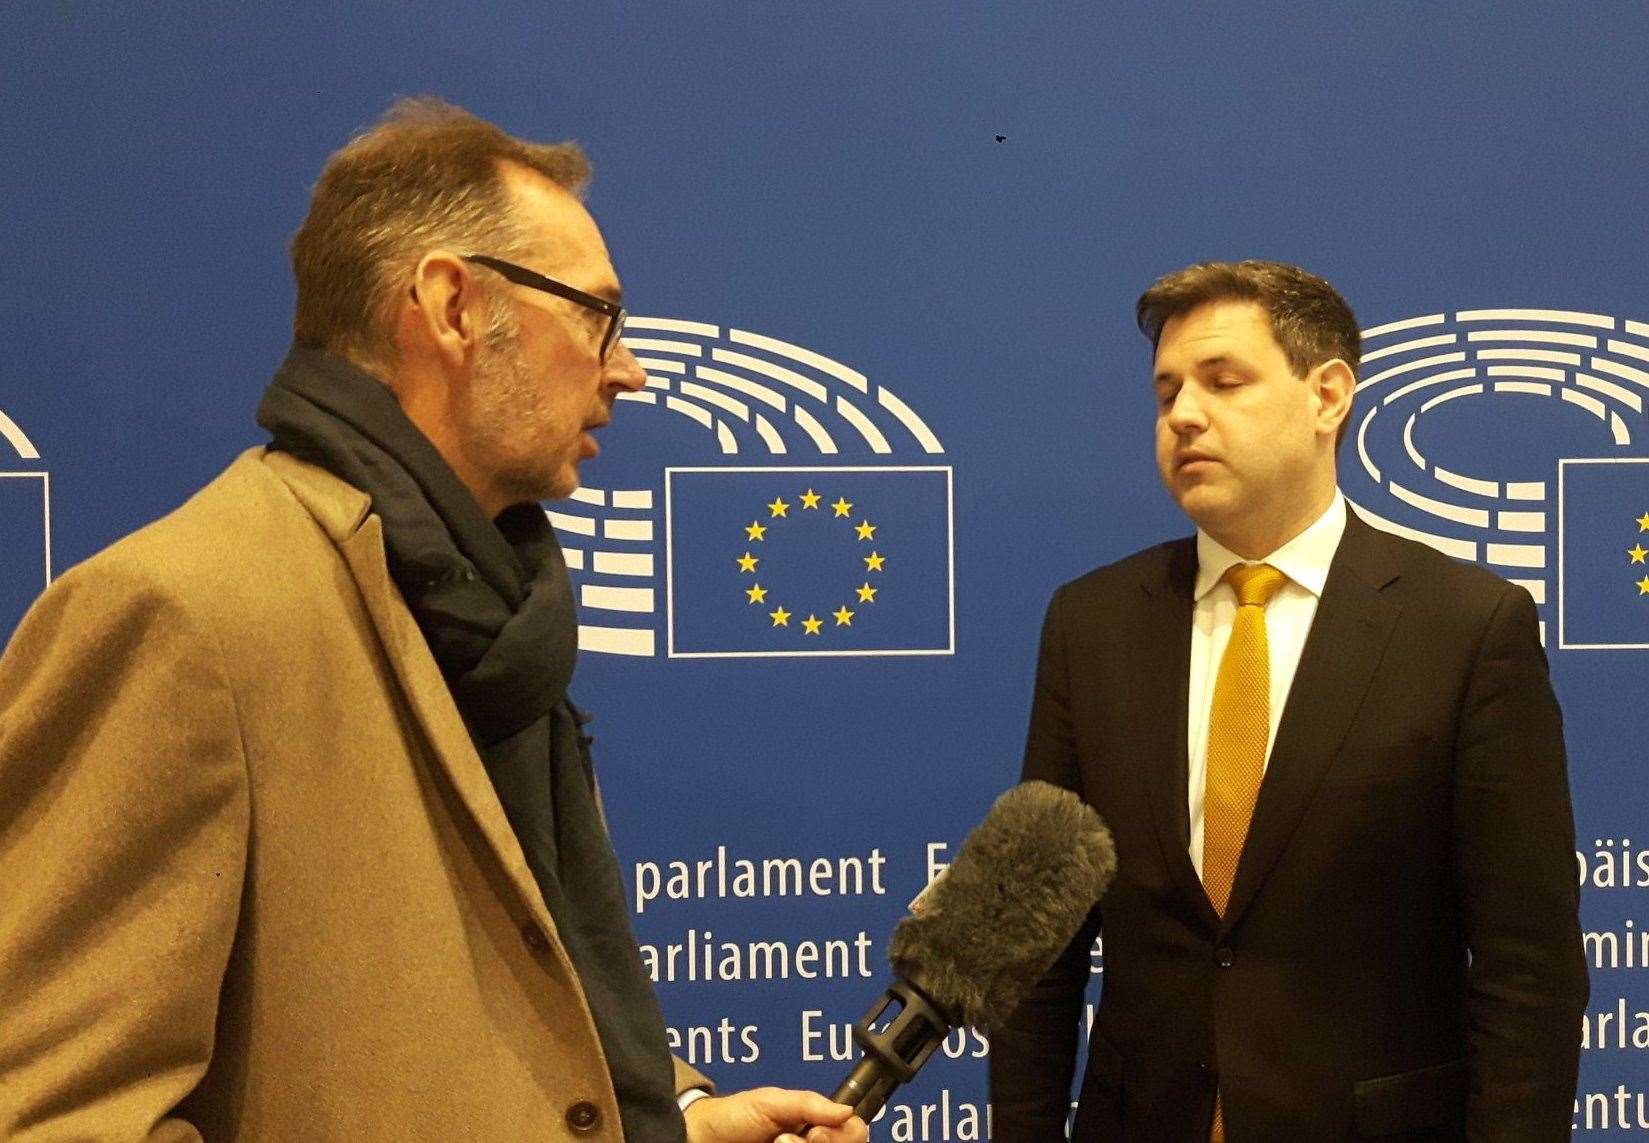 Paul Francis interviews Liberal Democrat MEP Anthony Hook